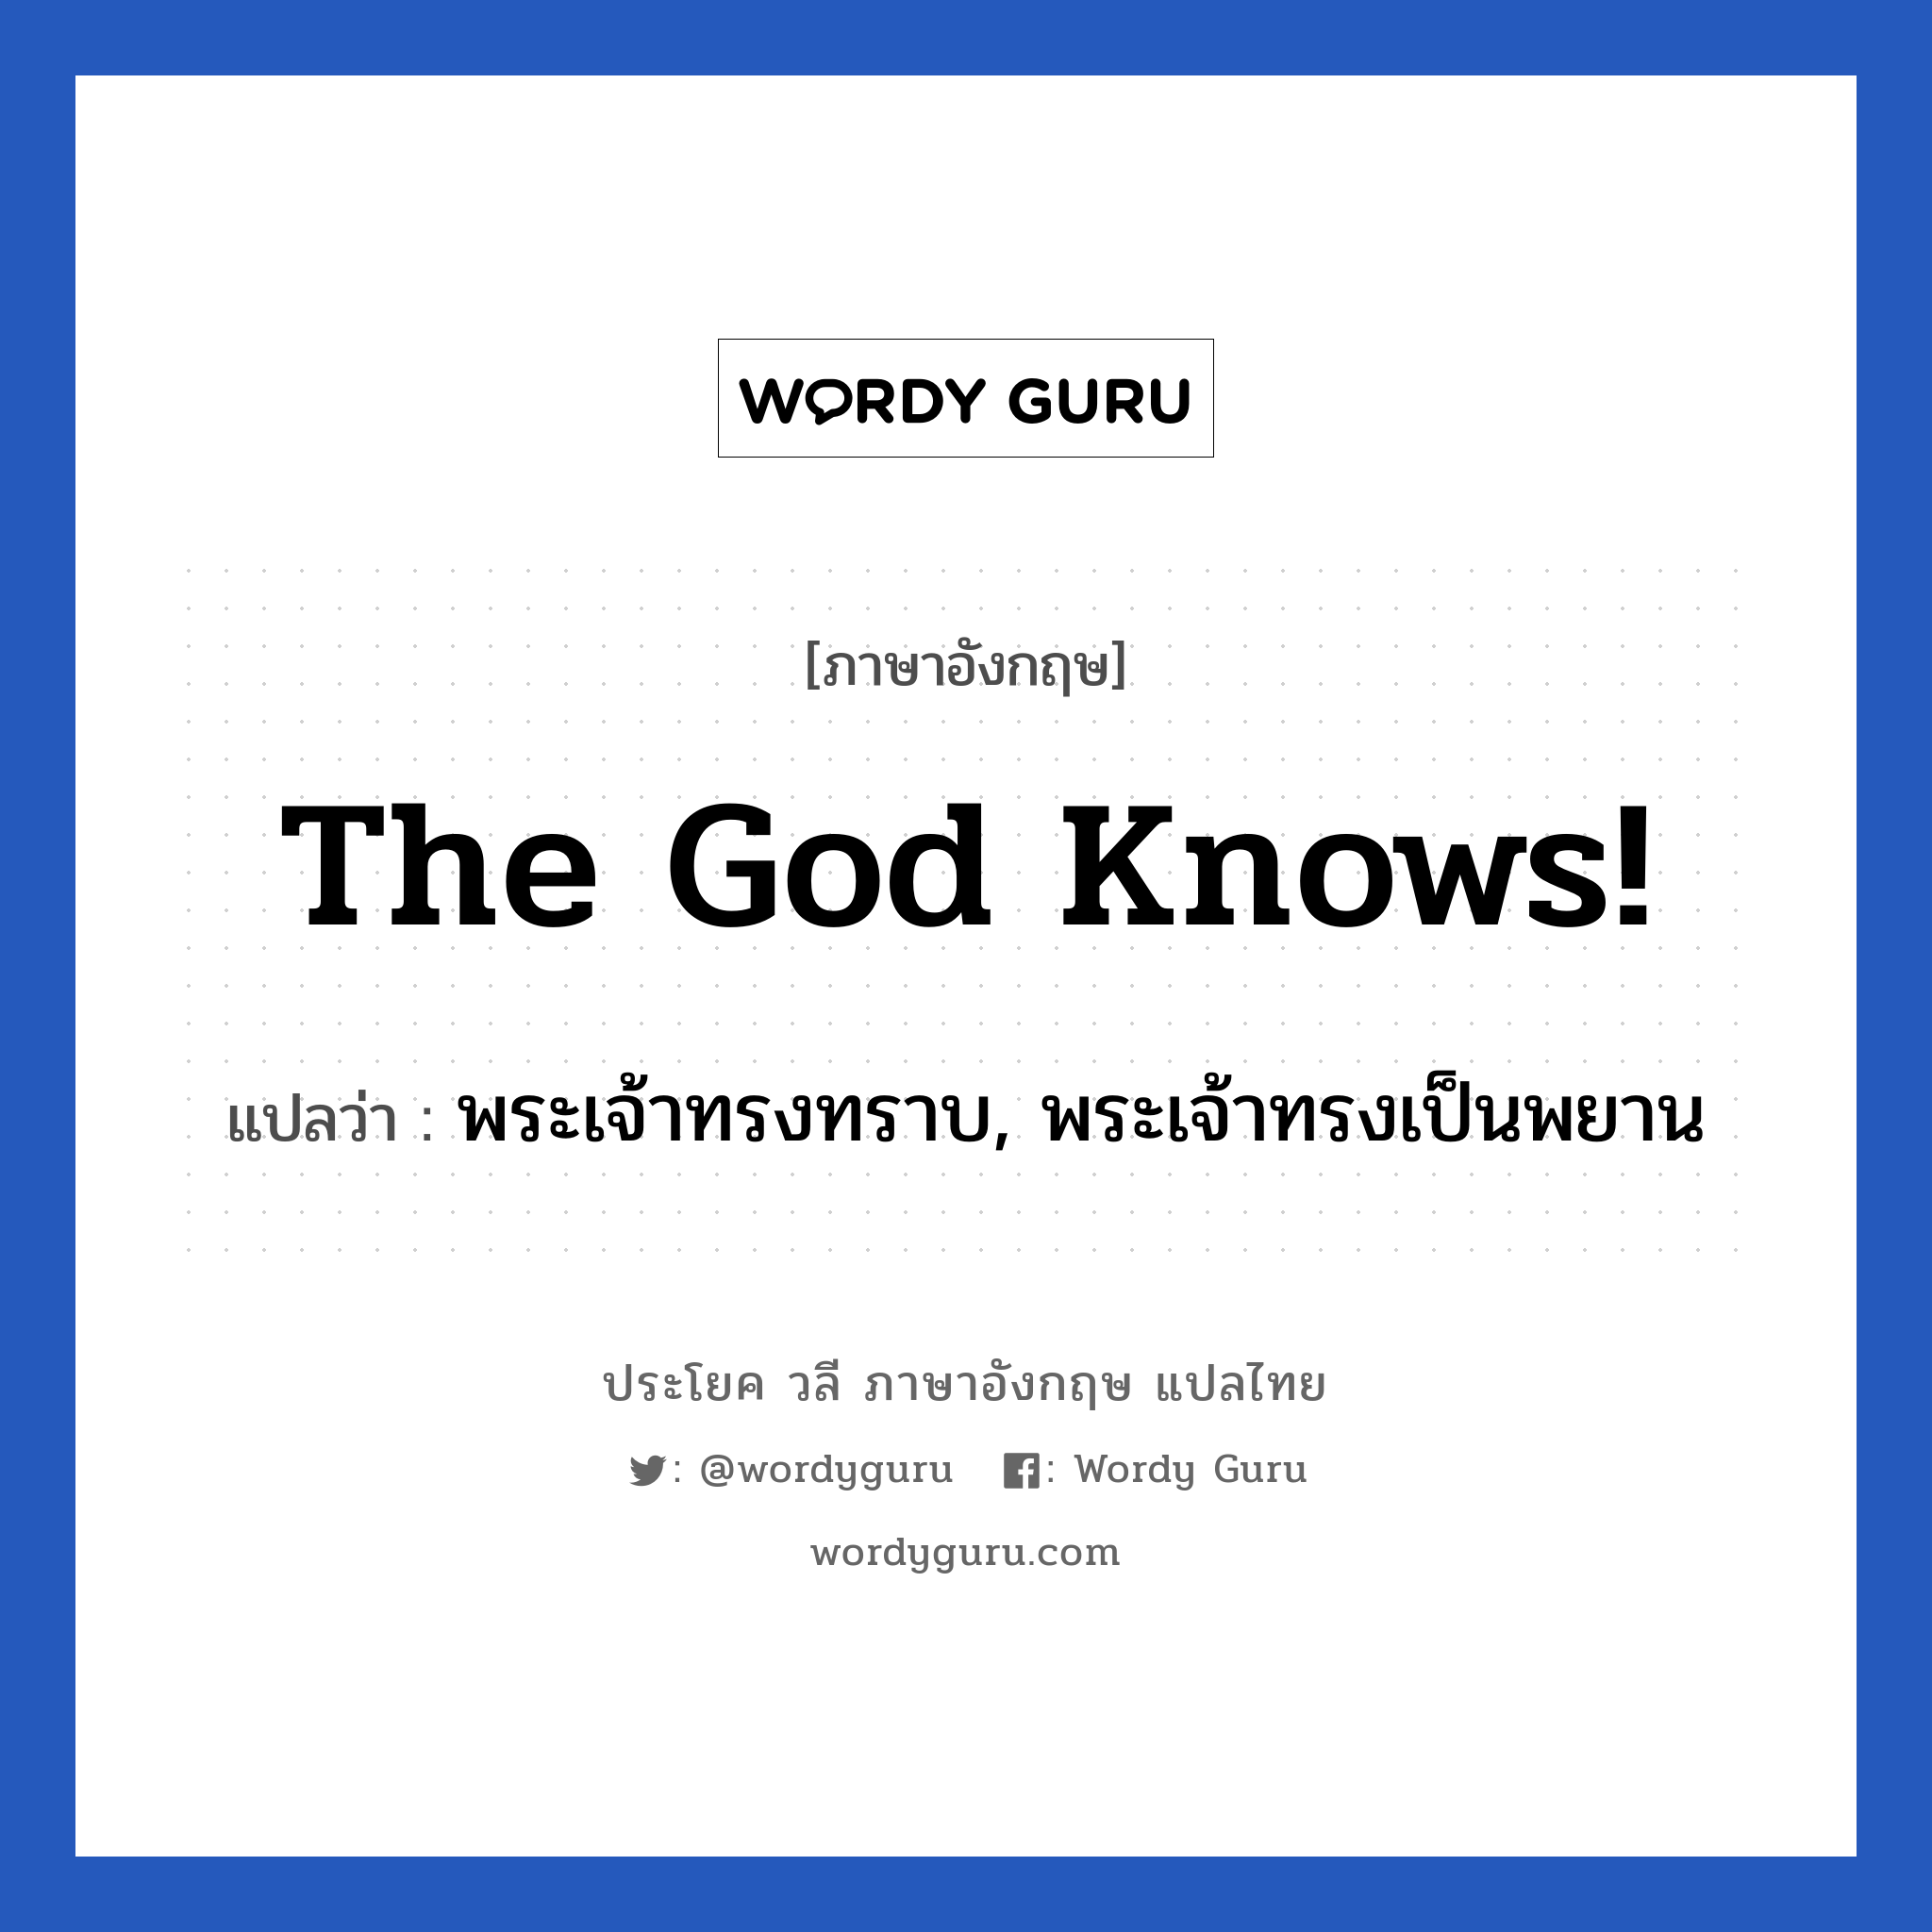 The God knows! แปลว่า?, วลีภาษาอังกฤษ The God knows! แปลว่า พระเจ้าทรงทราบ, พระเจ้าทรงเป็นพยาน